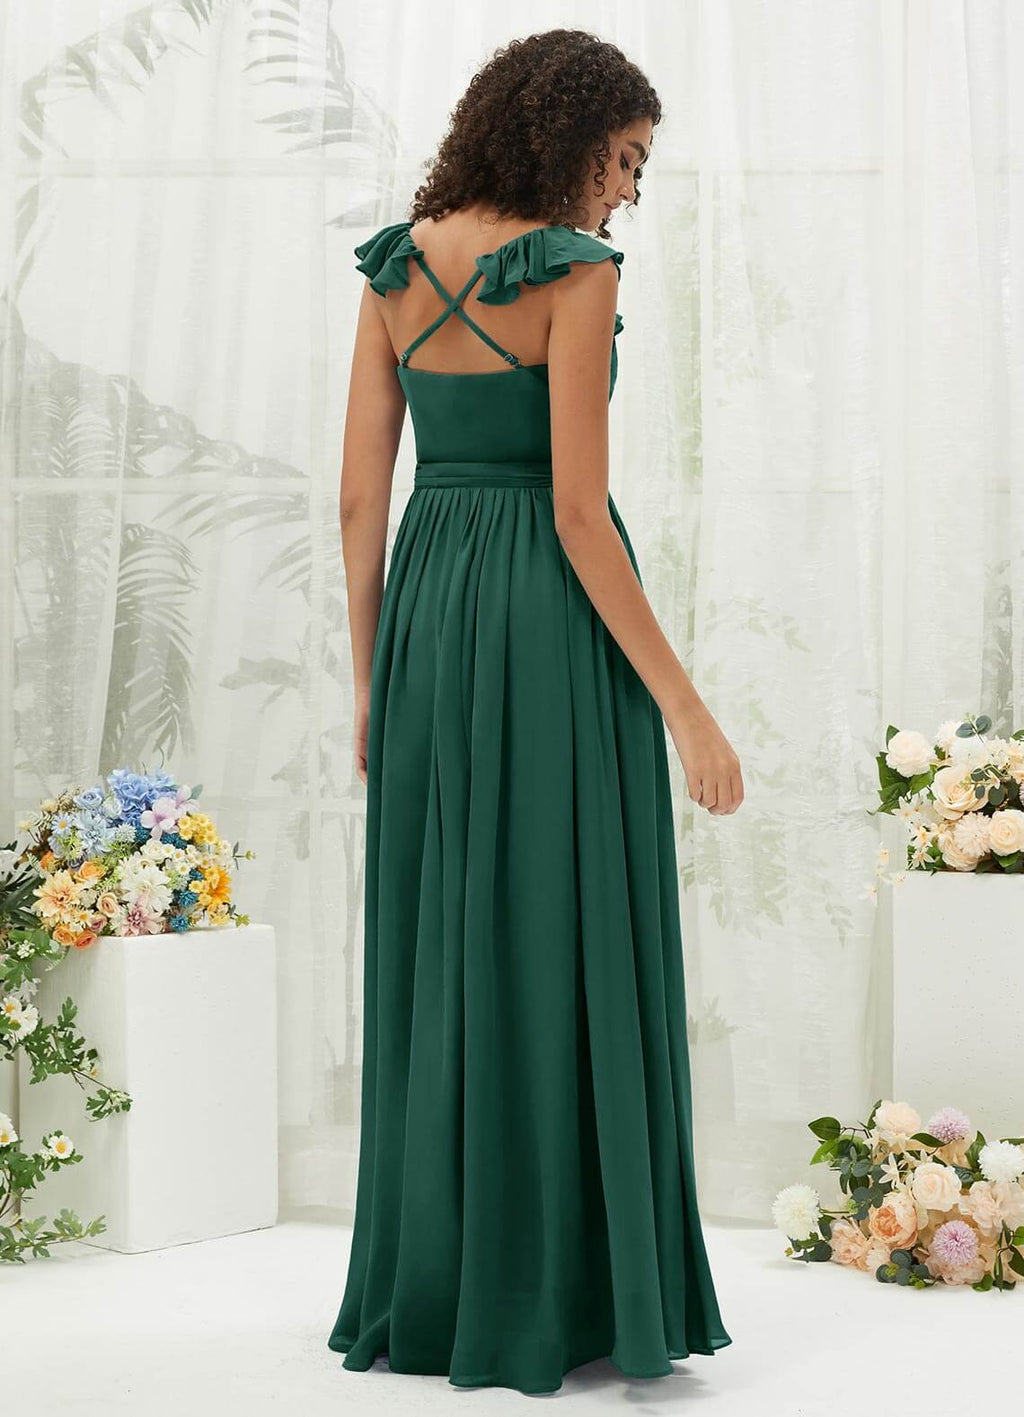 NZ Bridal Cap Sleeves Emerald Green Chiffon bridesmaid dresses R3702 Valerie a